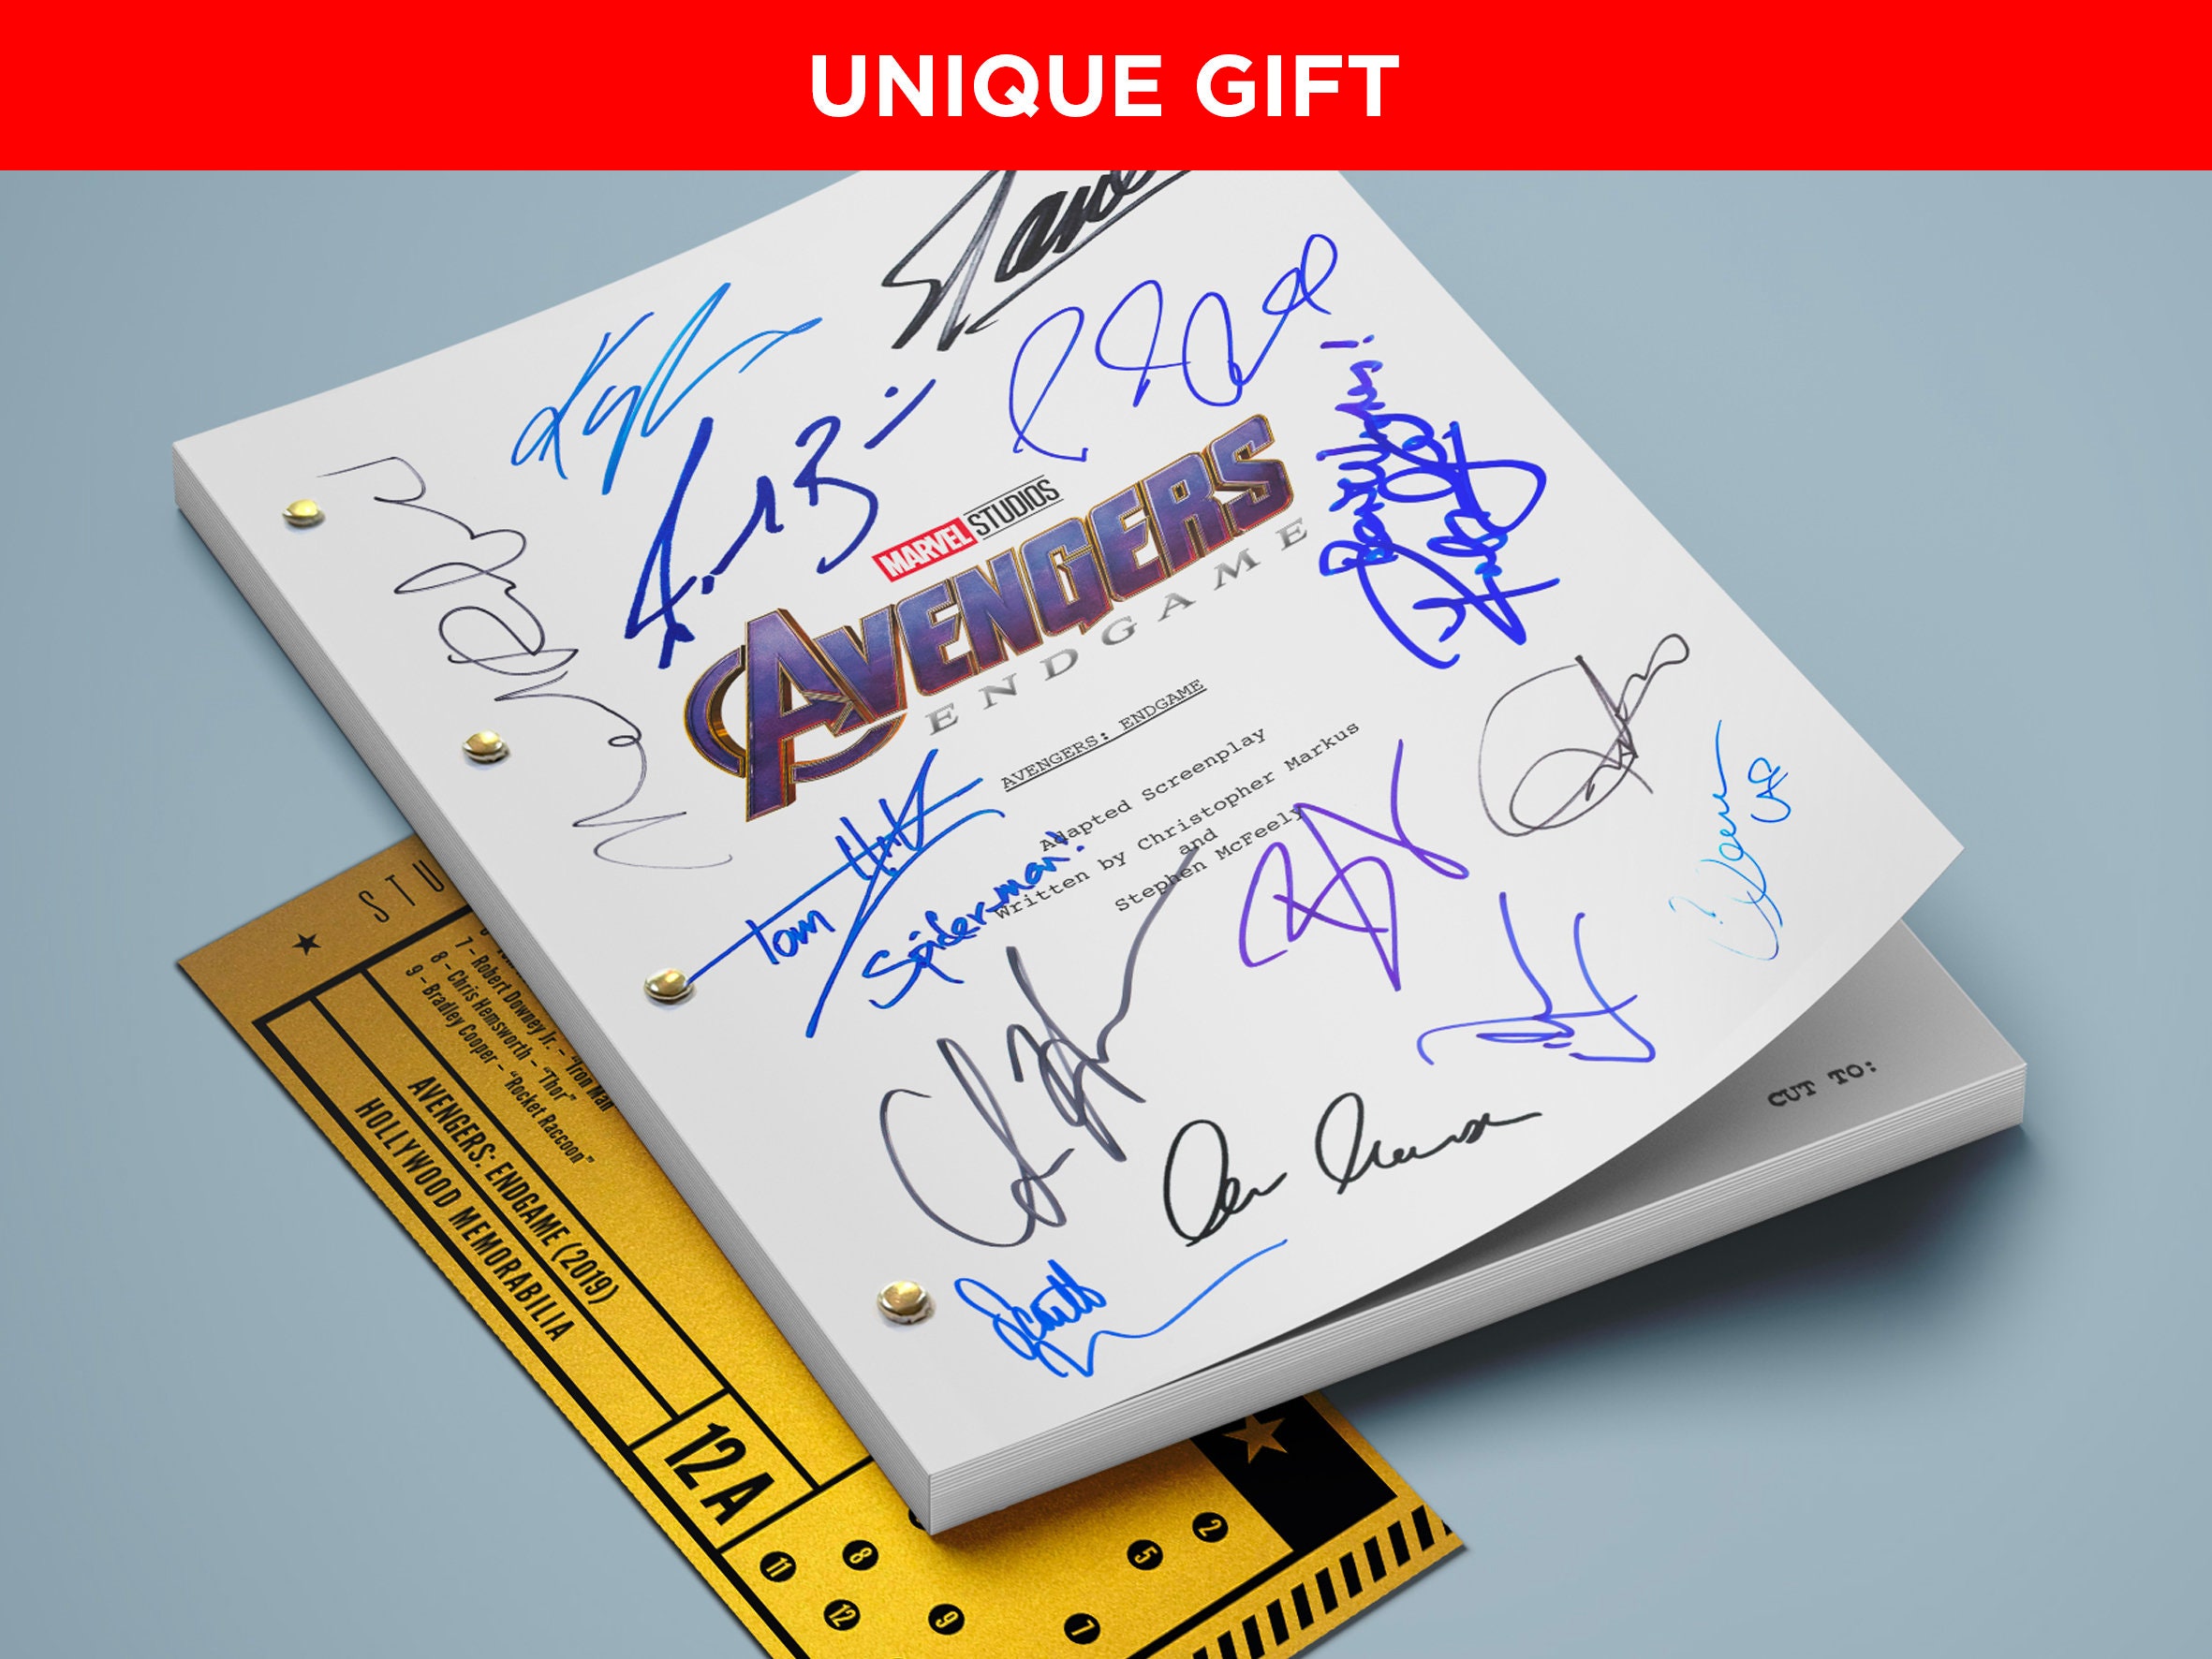 Avengers: Endgame Script Limited Signature Edition Custom Frame